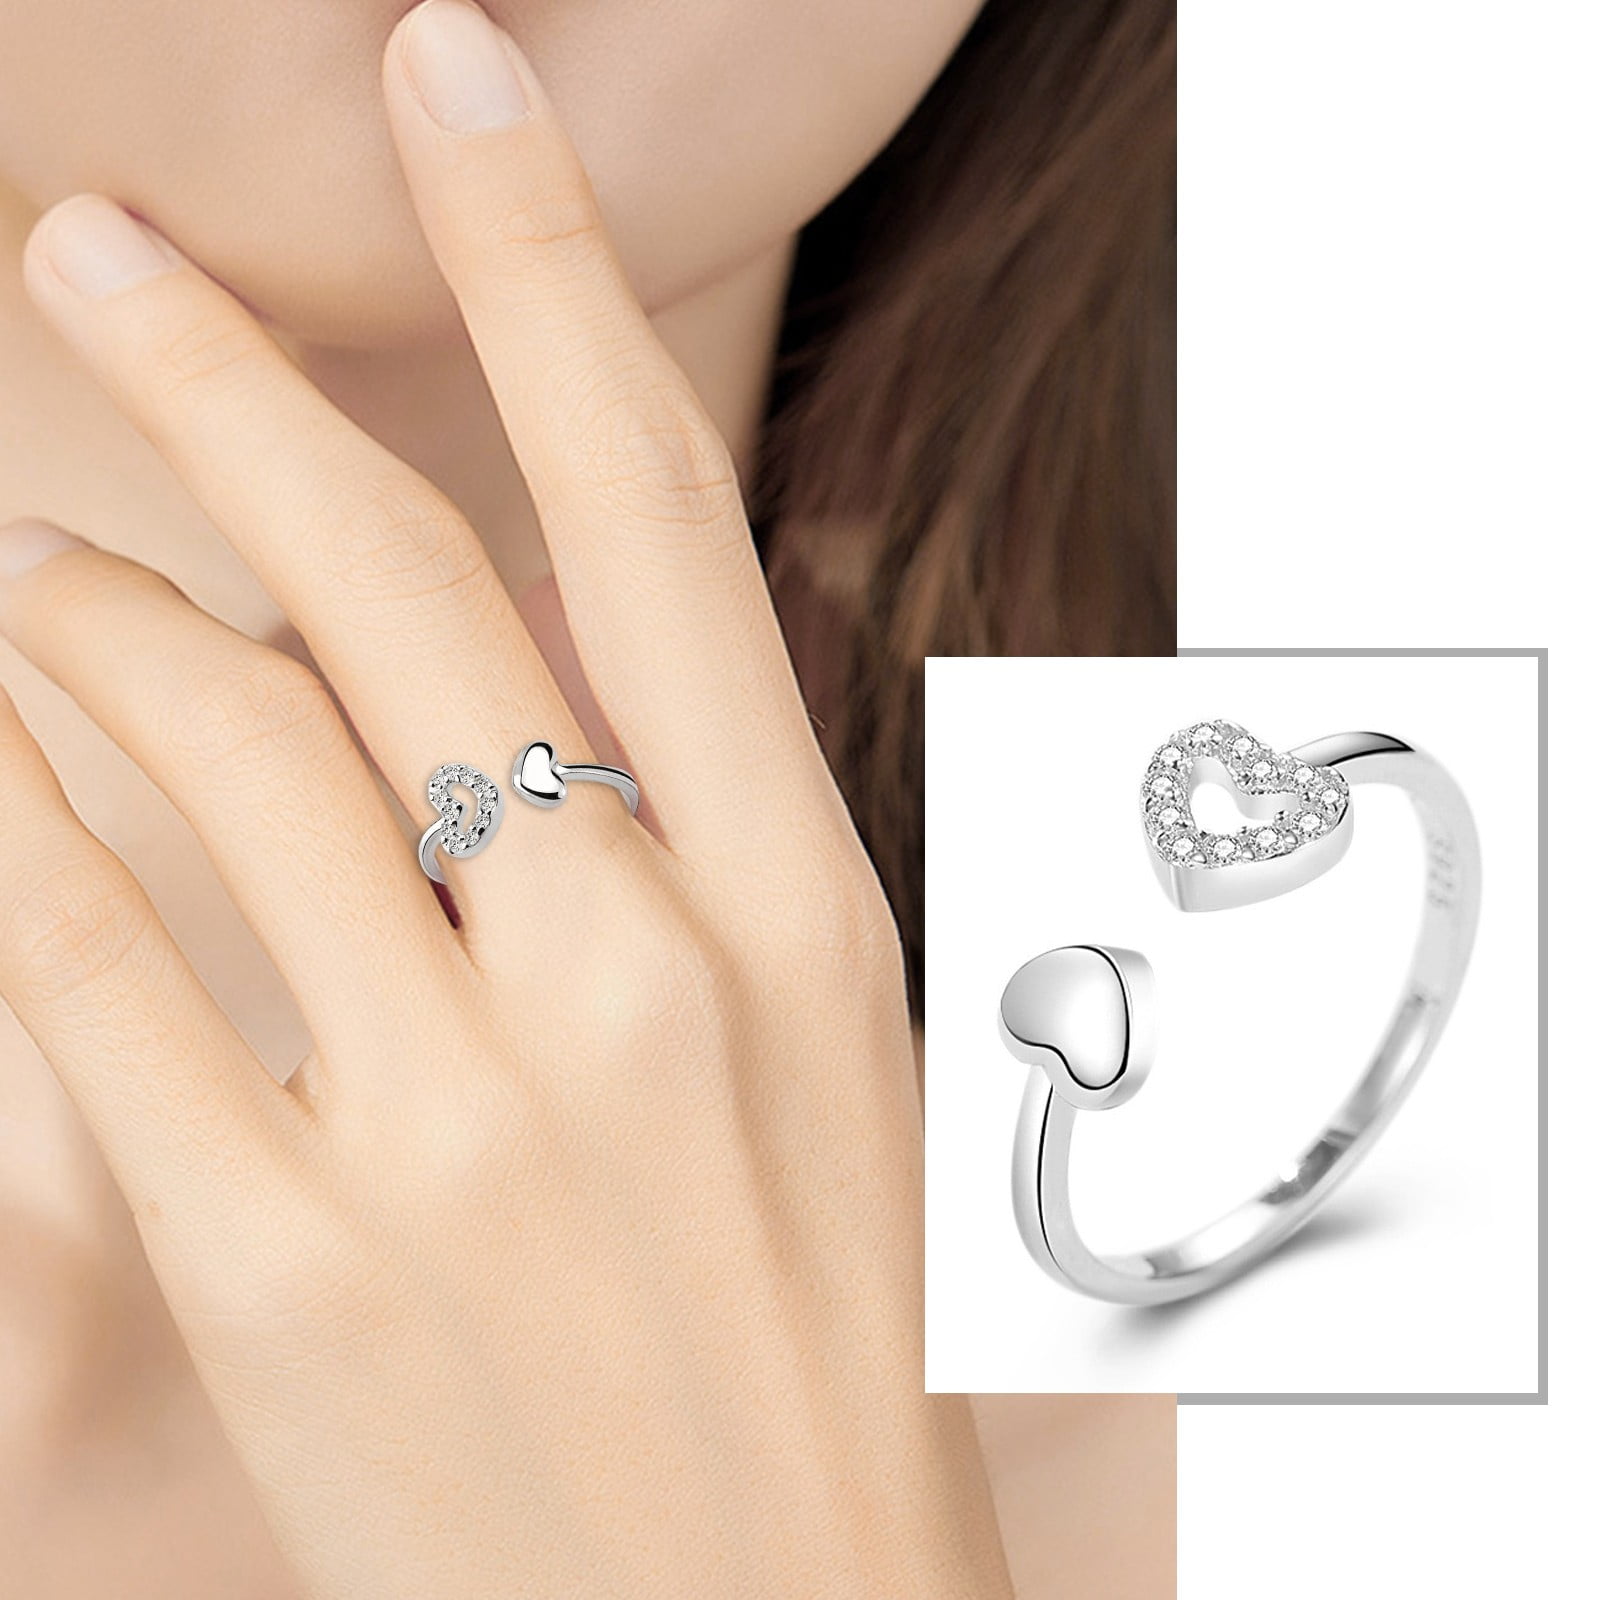 Modian Authentic 925 Sterling Silver Simple Brillar Cadena Fashion Finger  Ring Elegant Heart Fine Jewelry For Female Women Gift